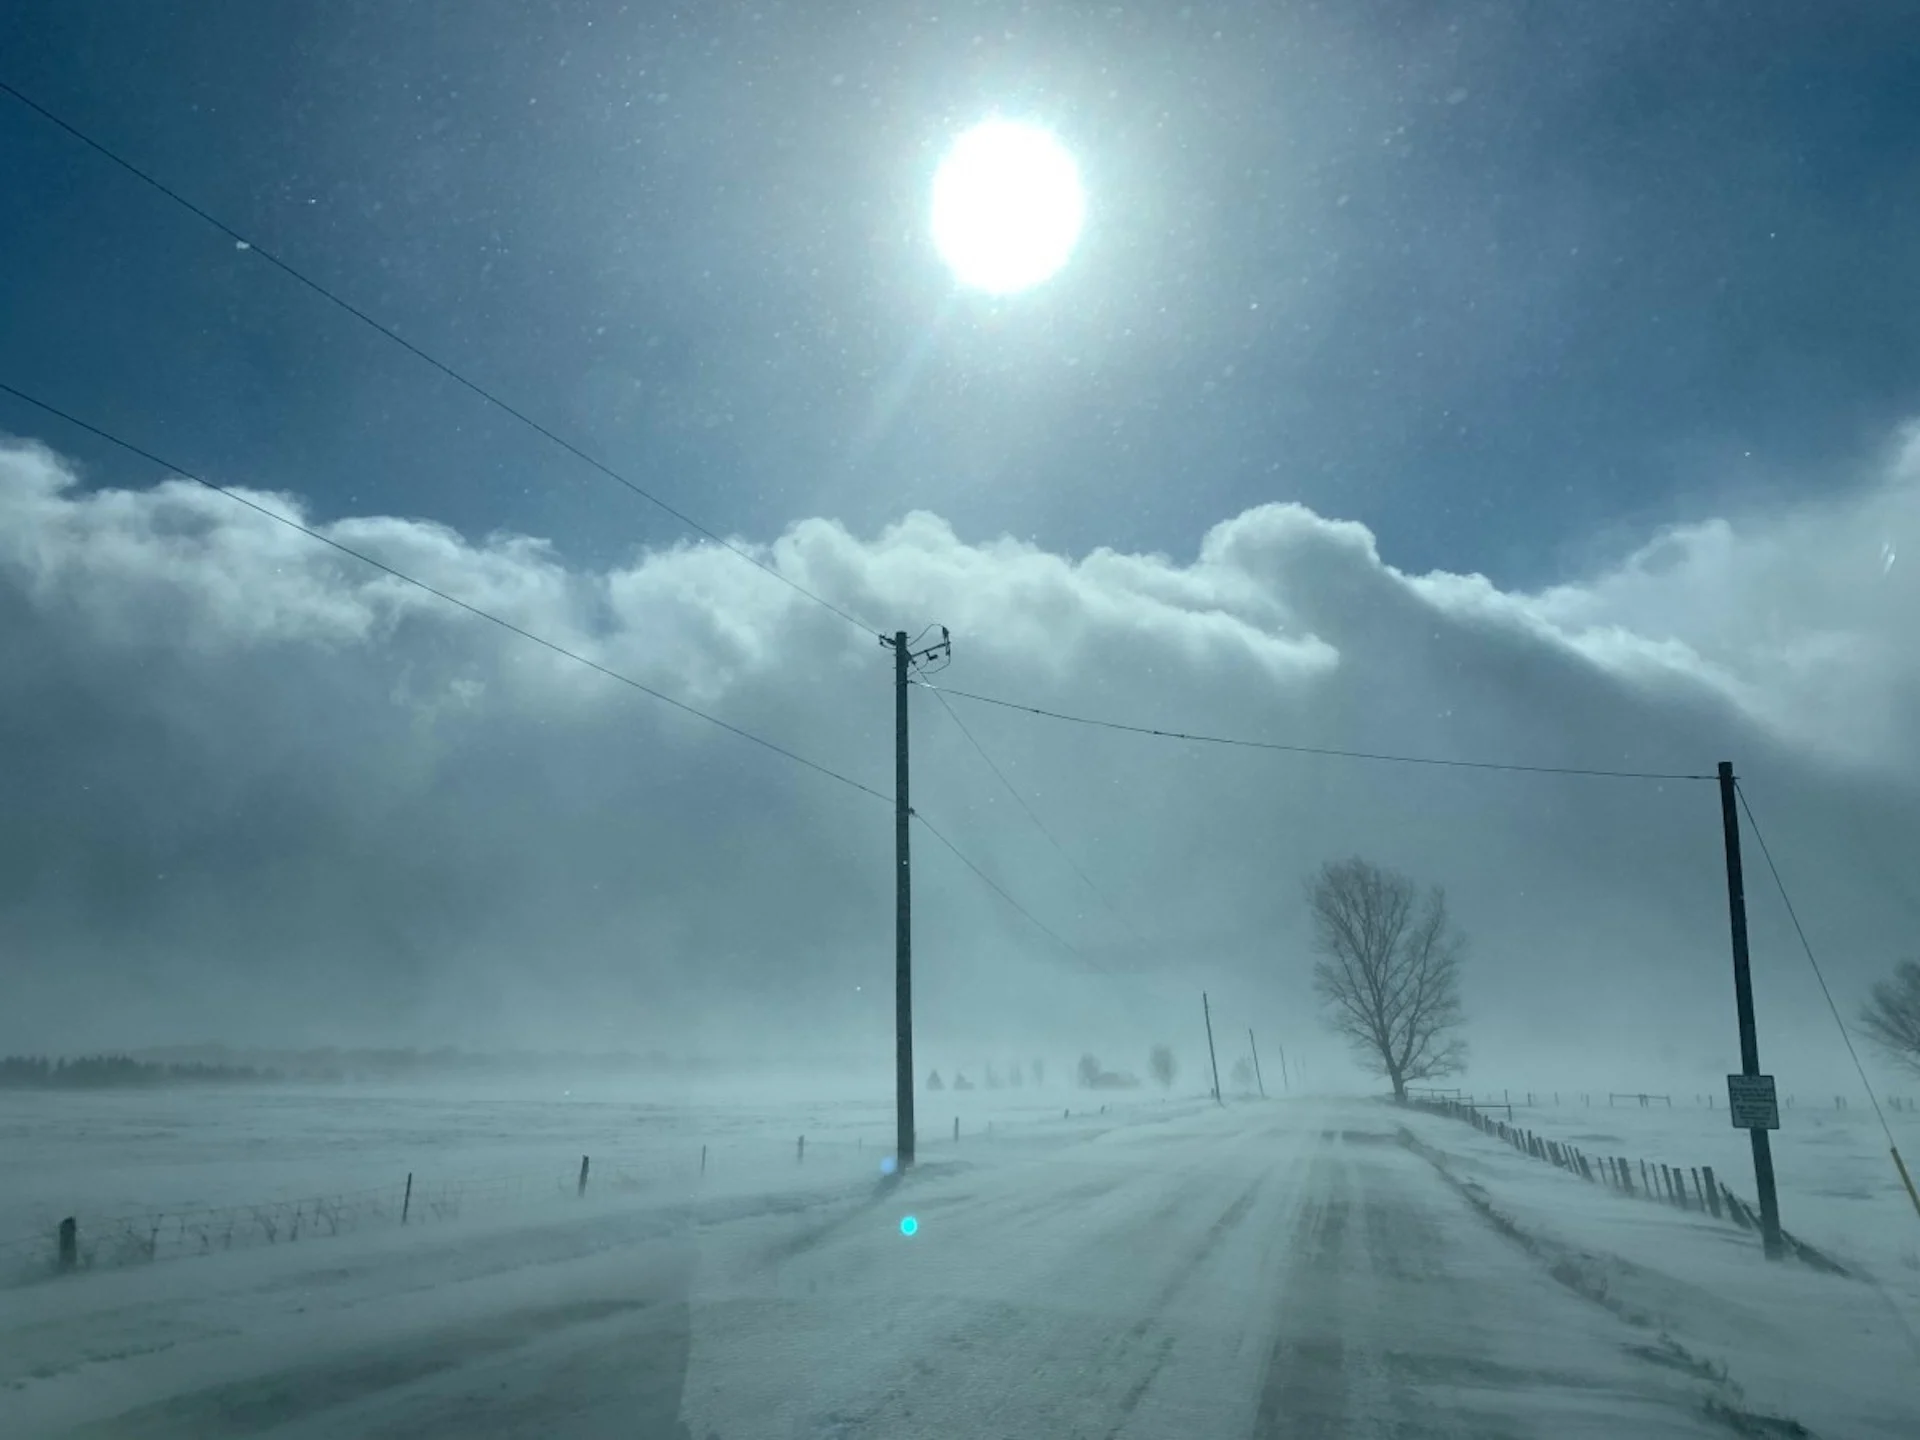 PHOTOS: Intense snow squalls spread whiteouts over southern Ontario